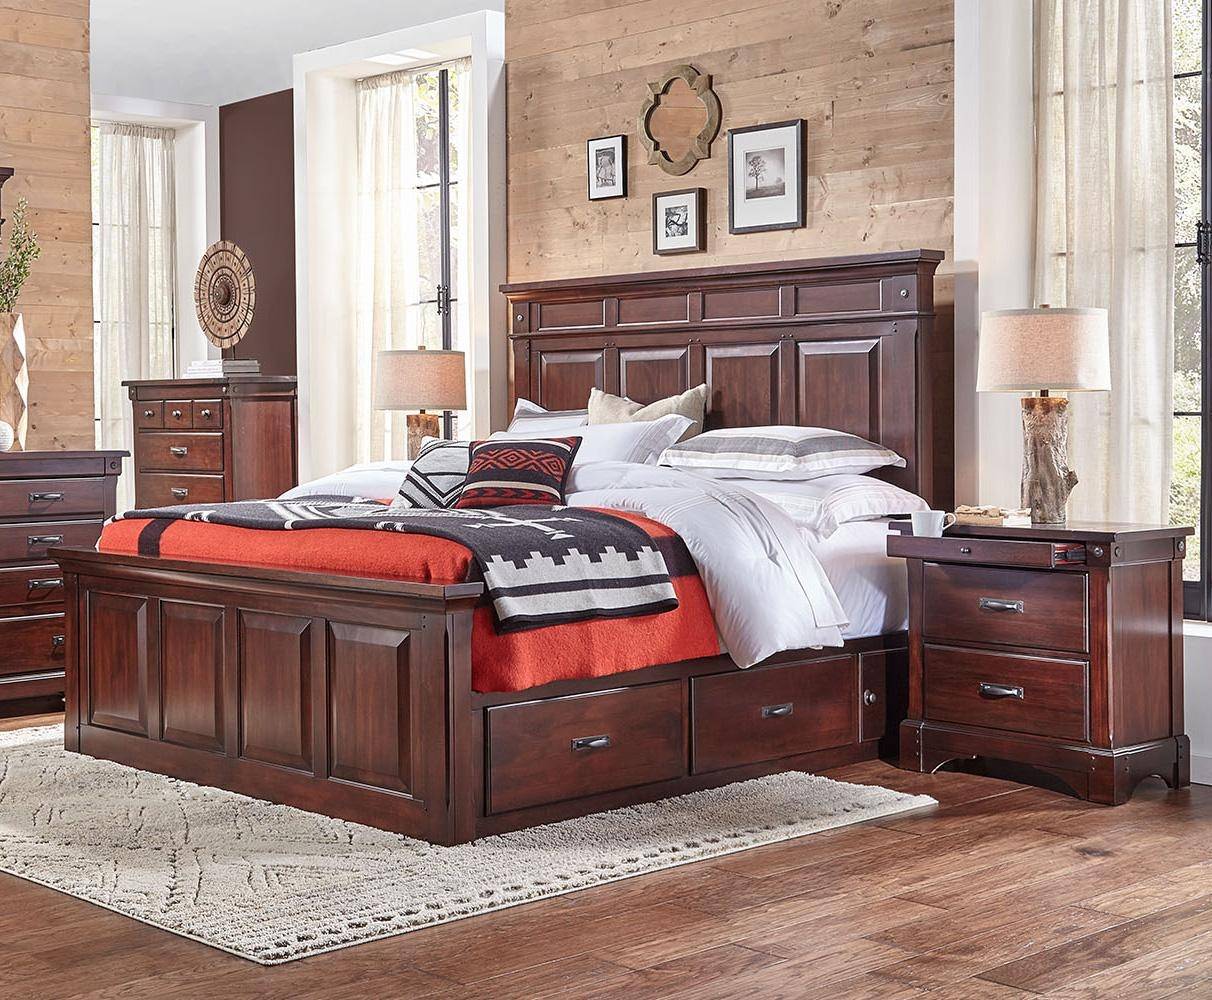 A America Kalispell Queen Storage Bedroom Set 5 Pcs In Brown Rustic Mahogany Wood